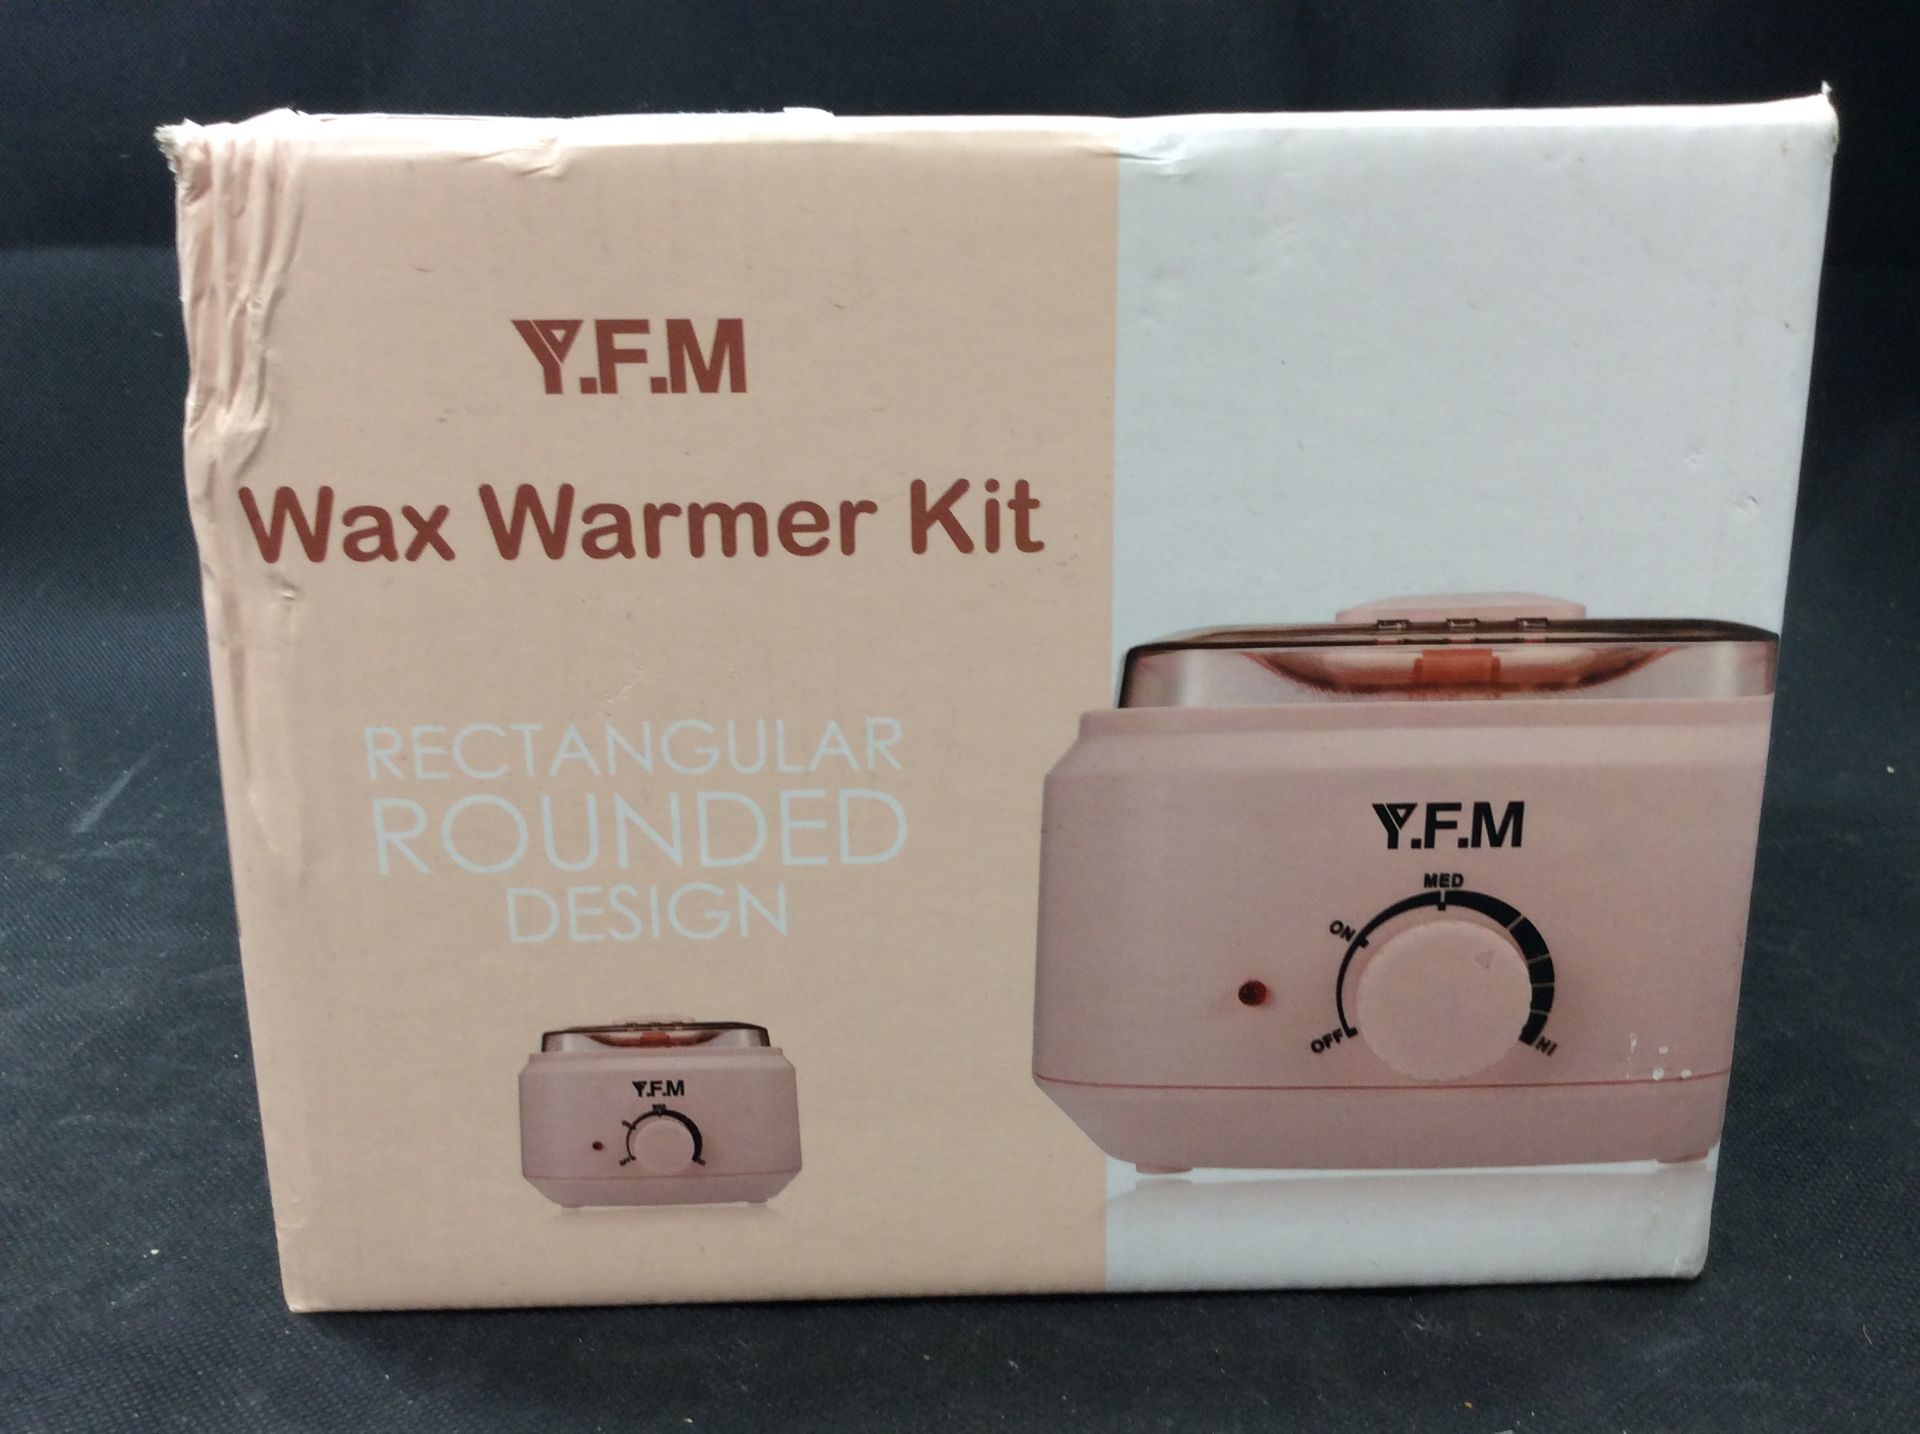 Y.F.M wax warmer kit AX200 - Image 2 of 4